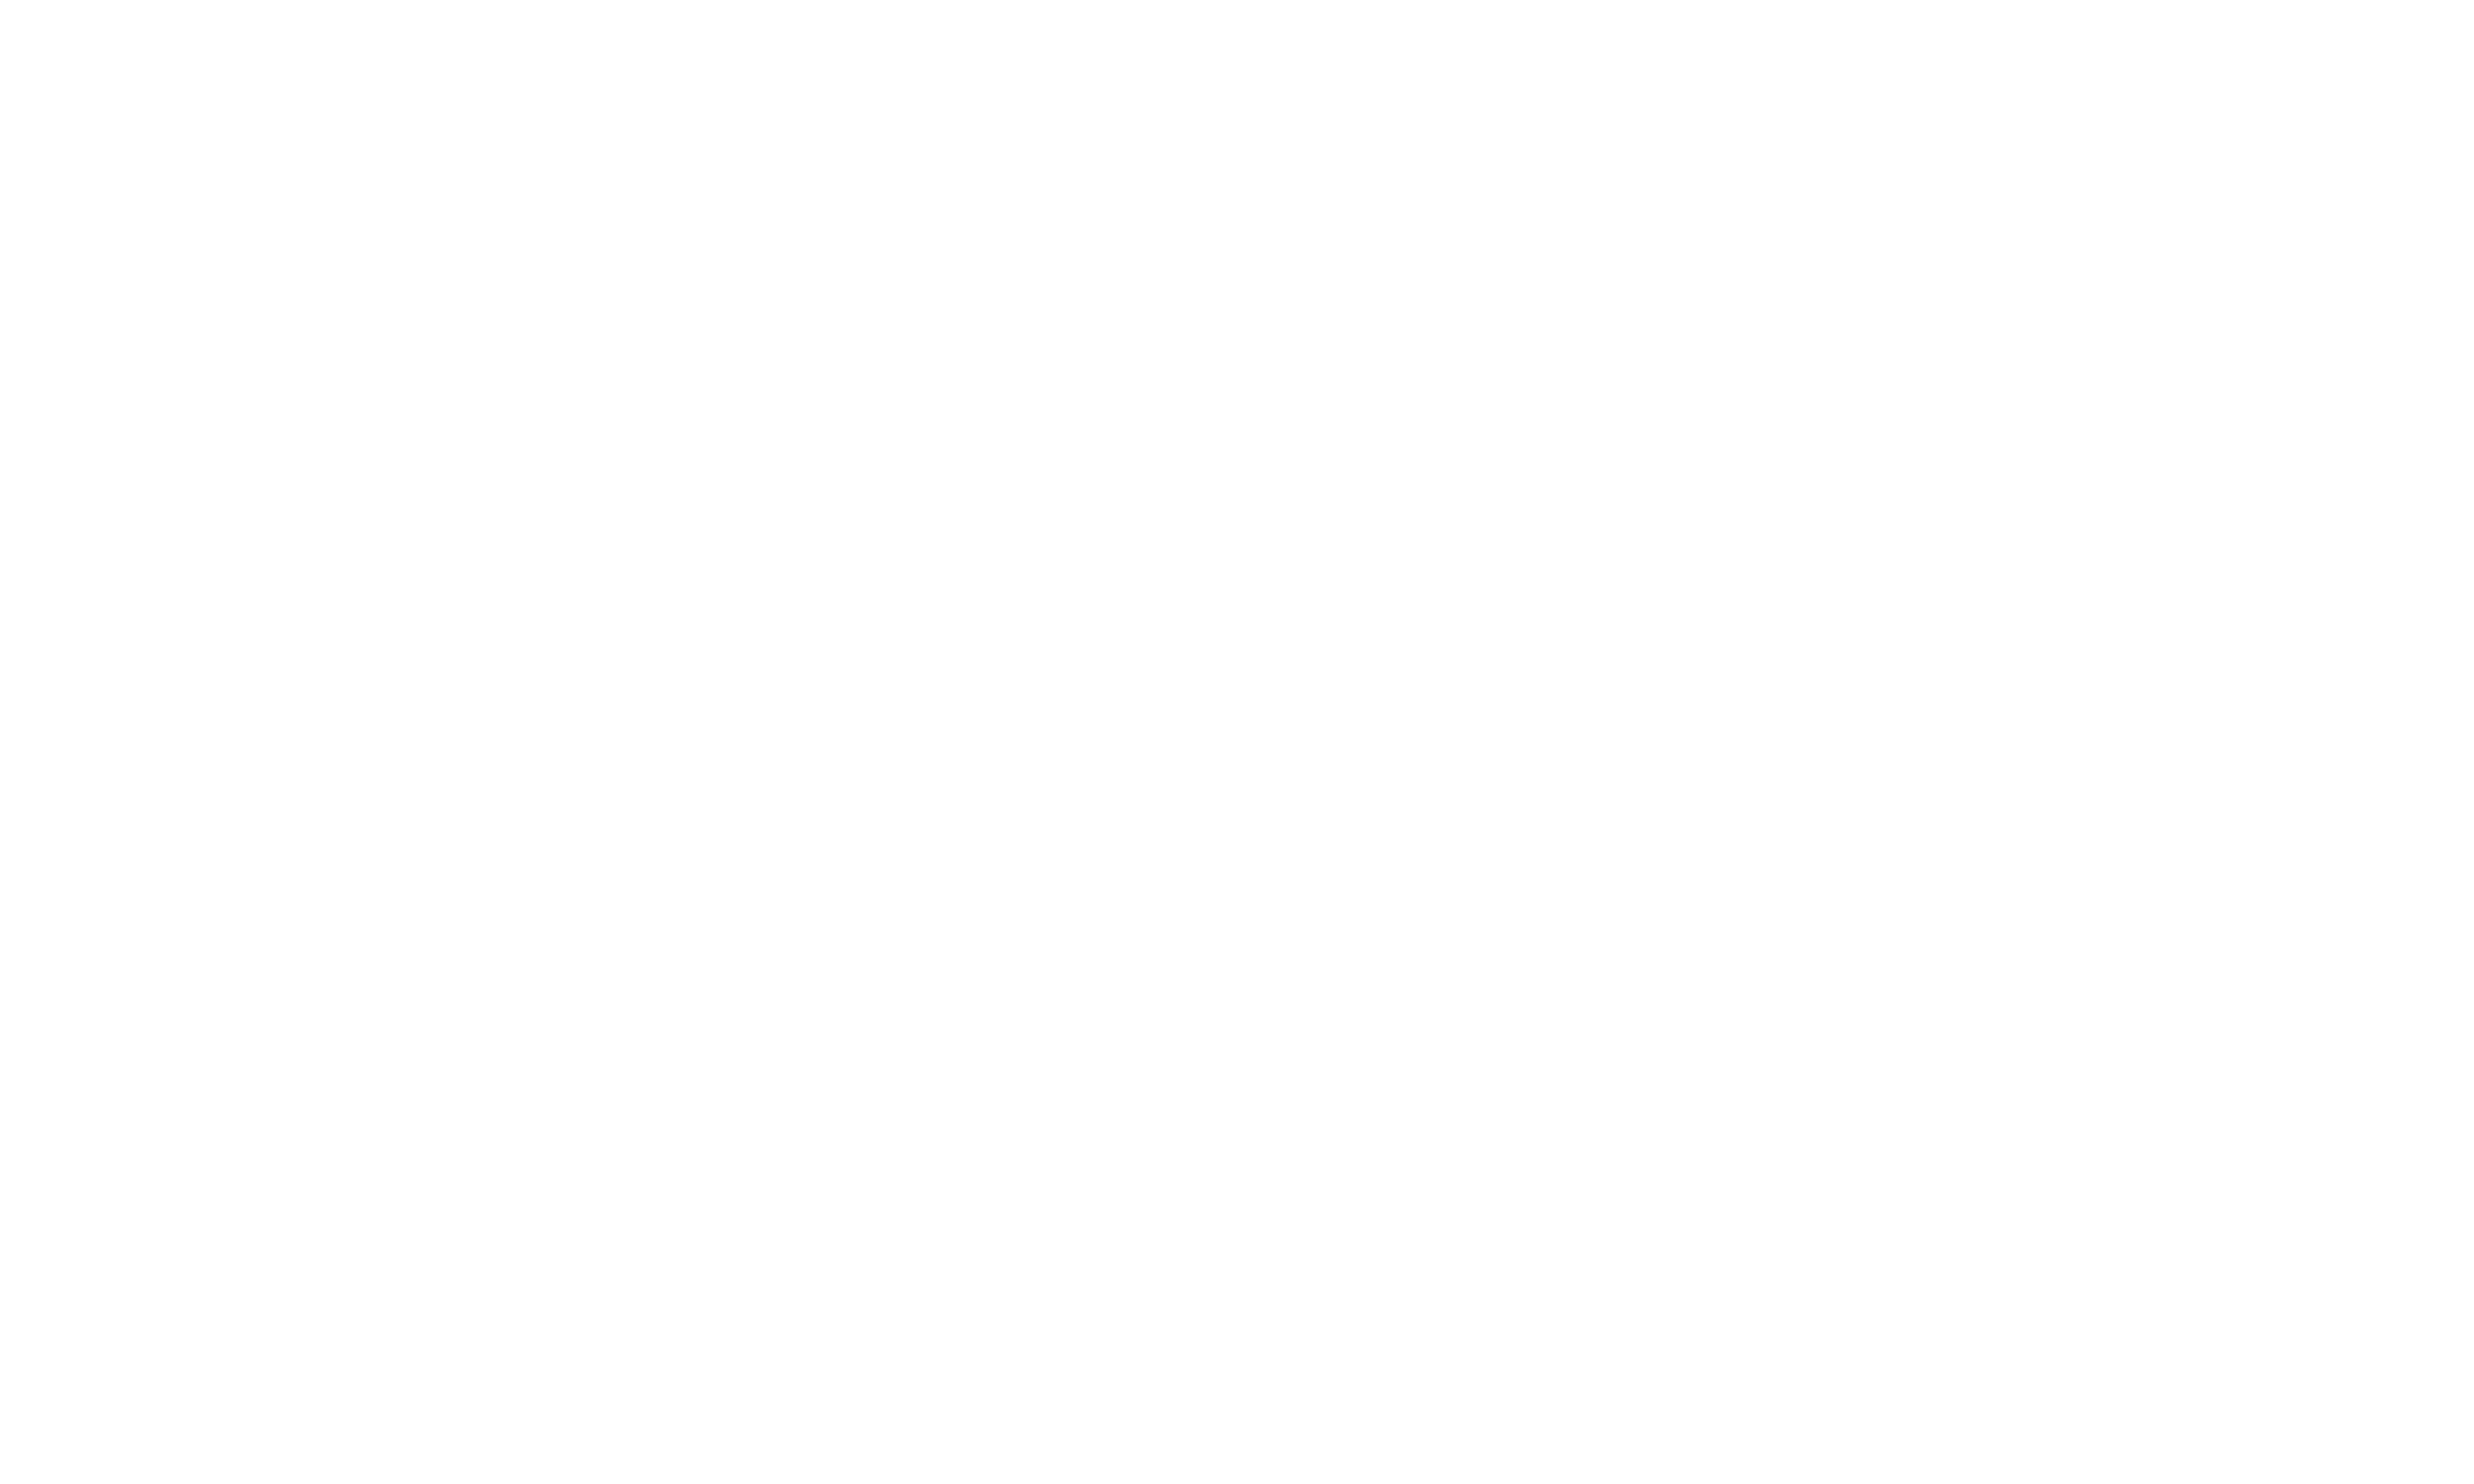 Spectron Sp. z o.o.